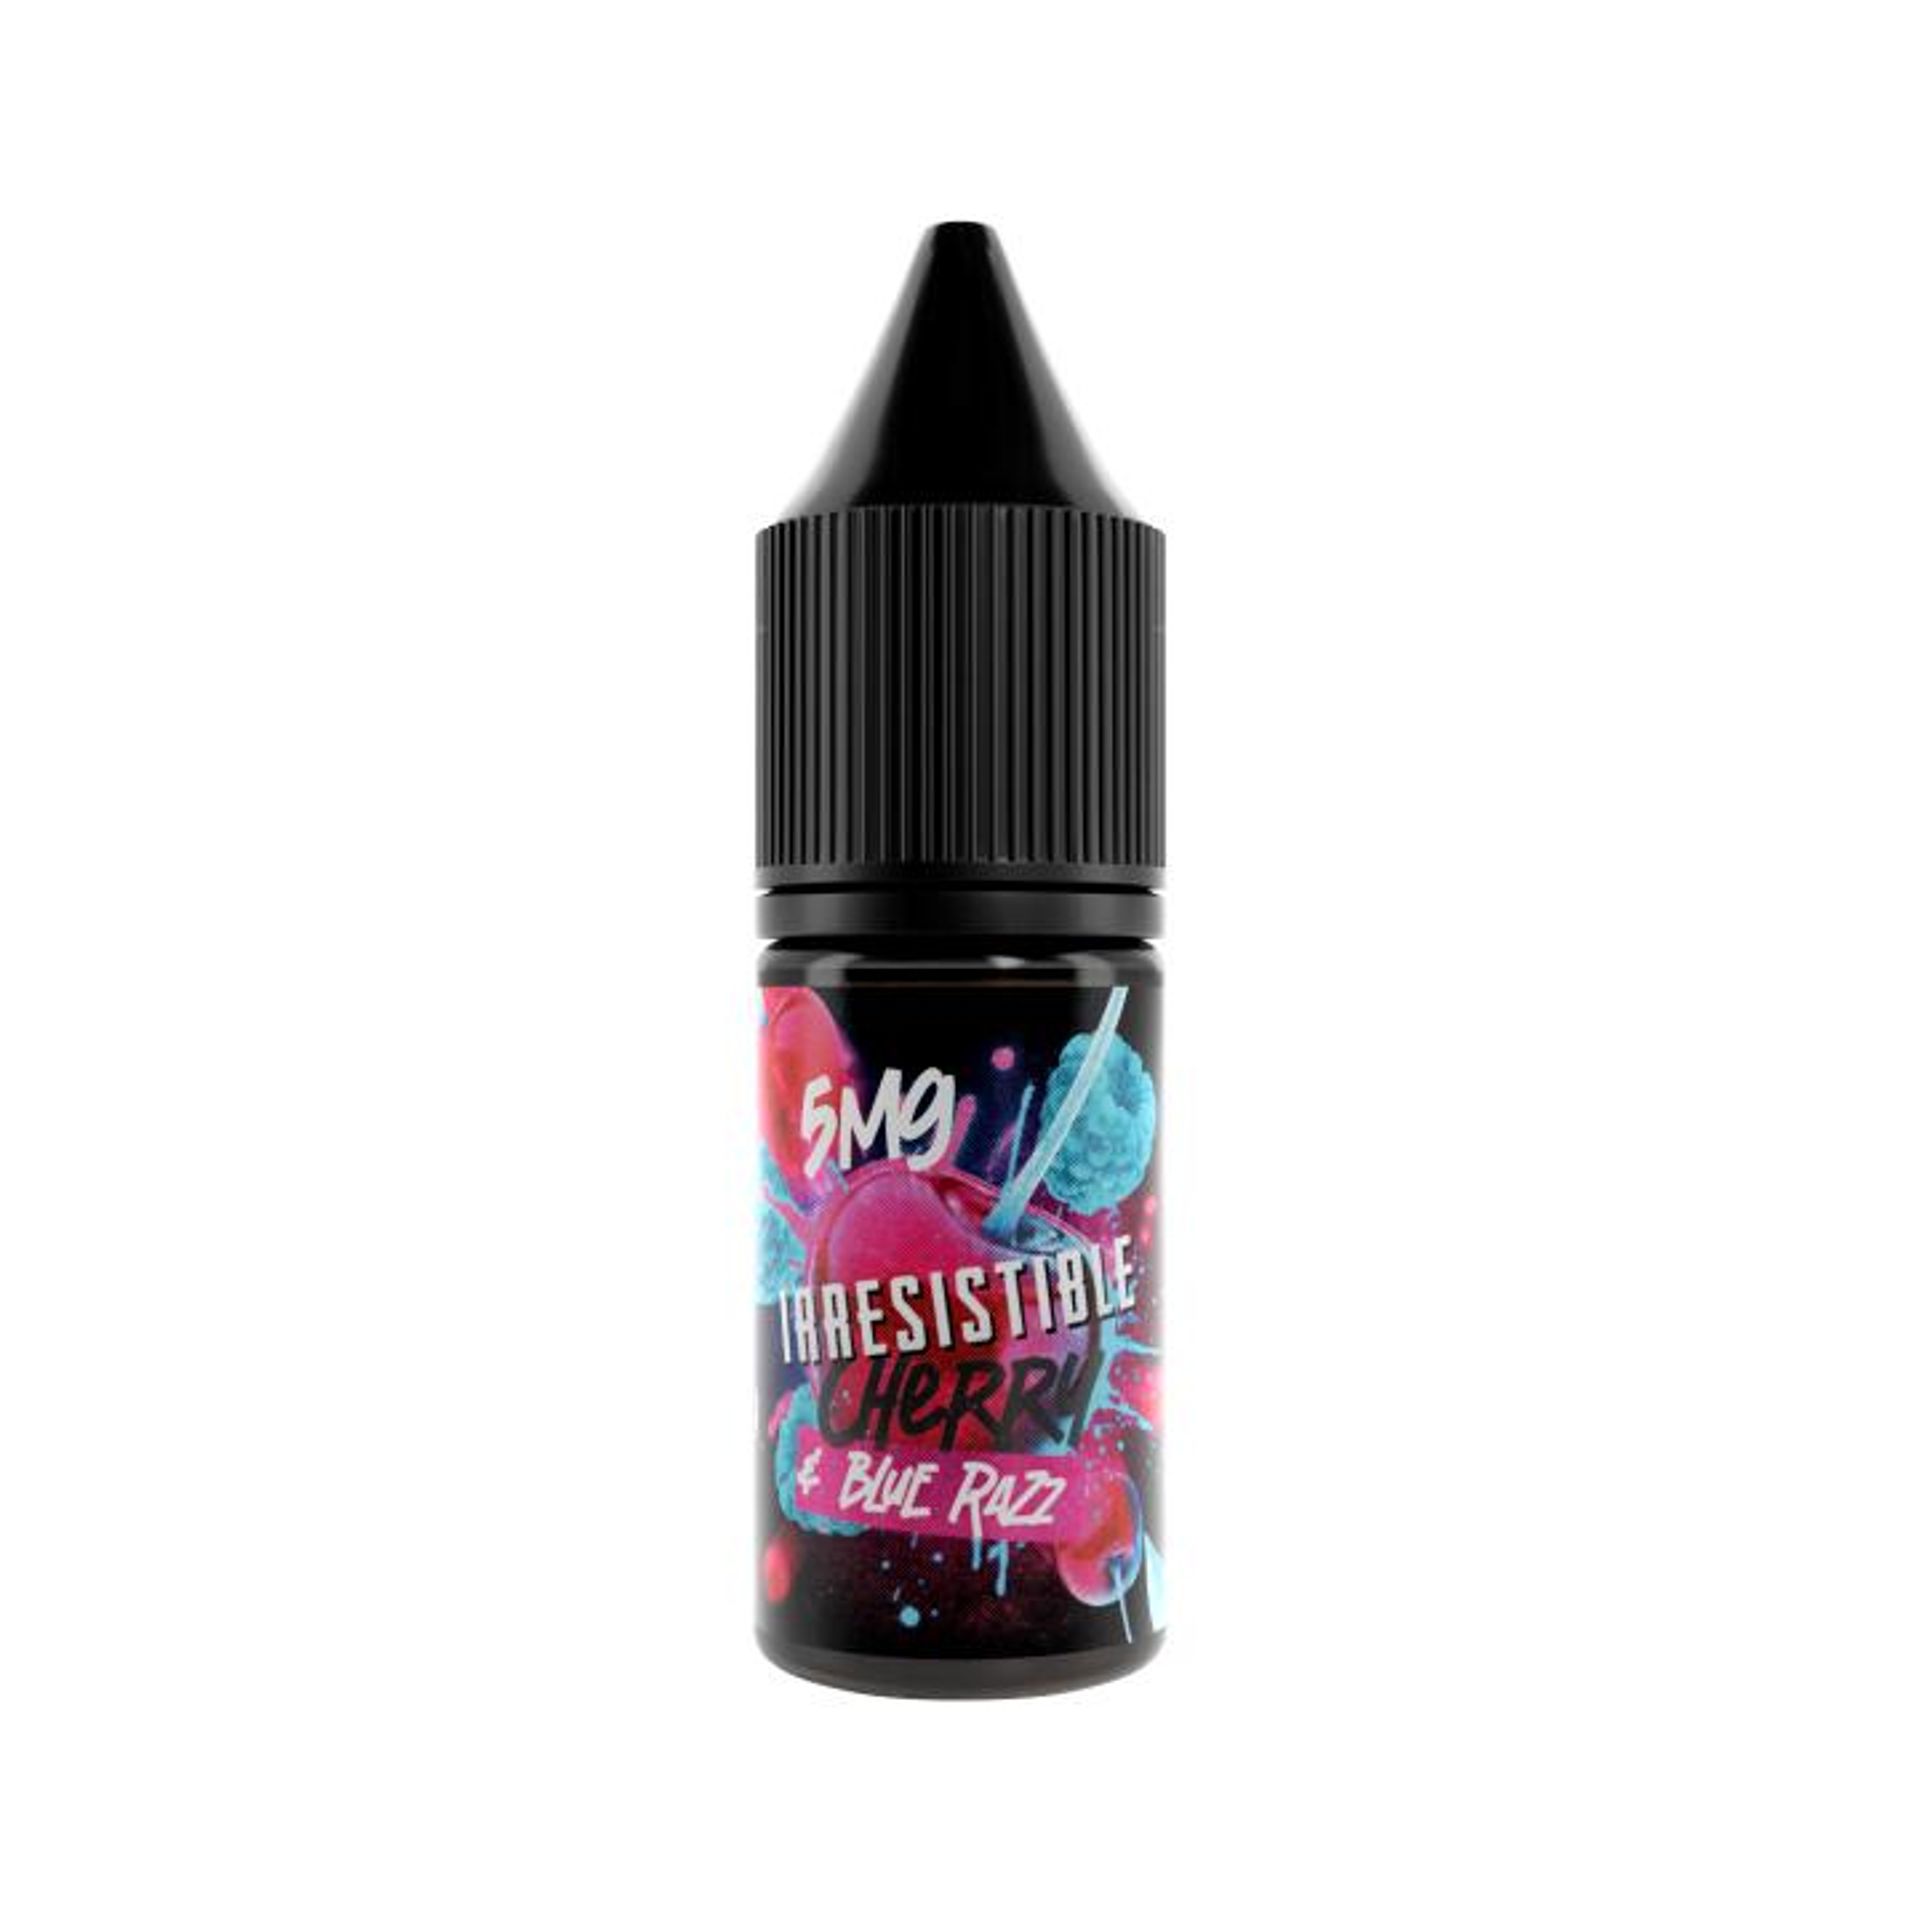 Image of Cherry Blue Razz by Irresistible E-liquids